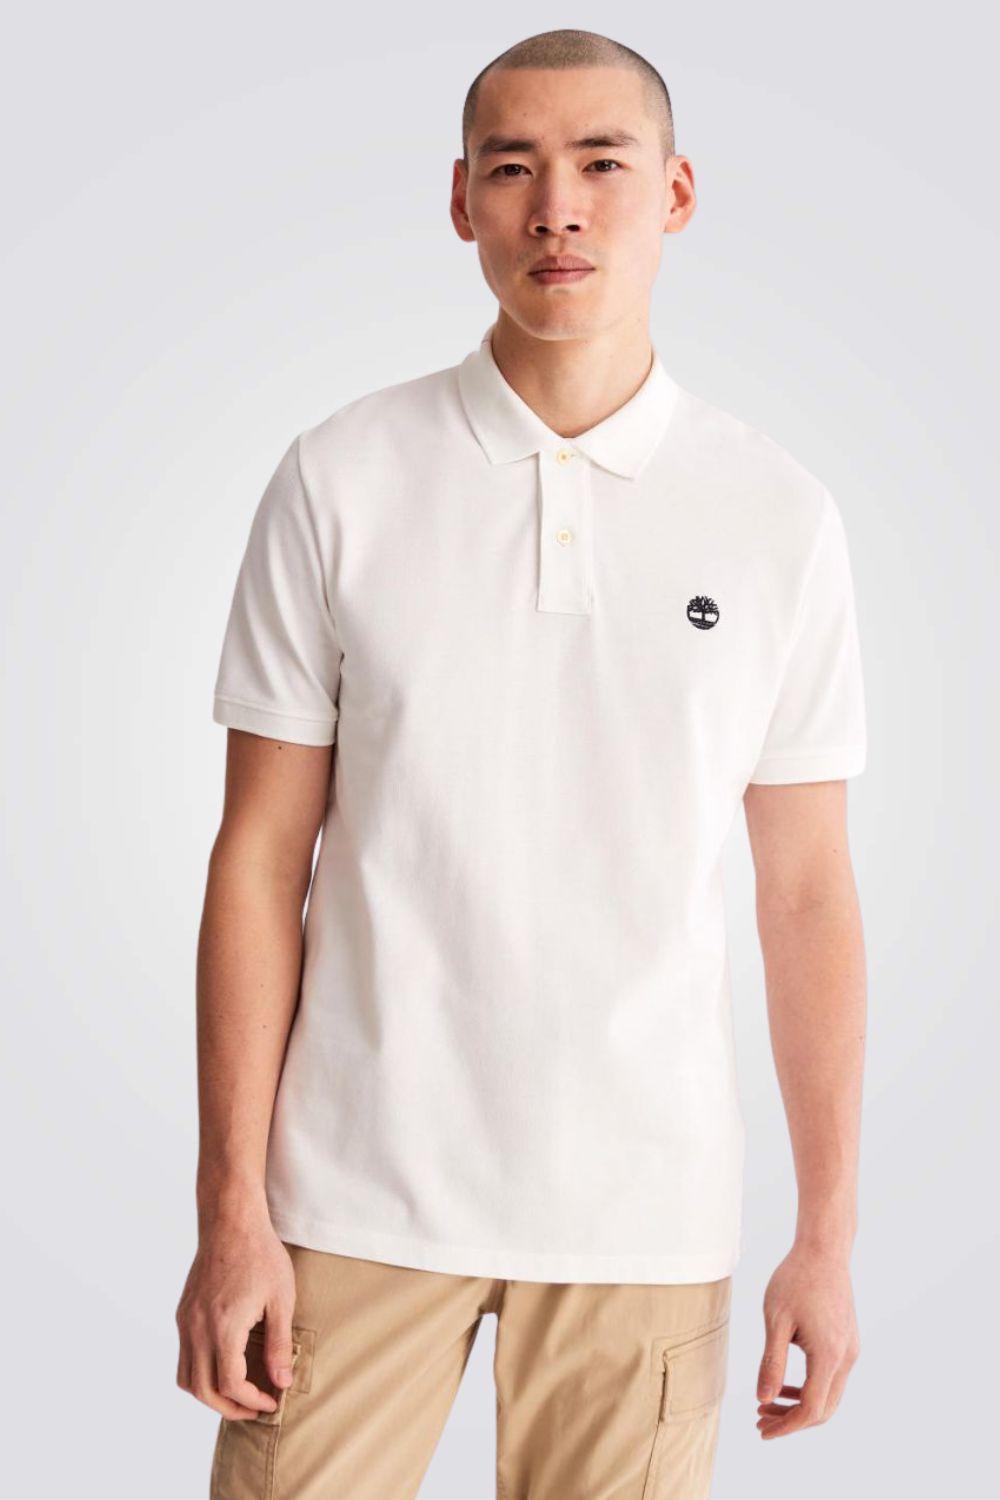 TIMBERLAND - חולצת פולו MILLERS RIVER בצבע לבן - MASHBIR//365